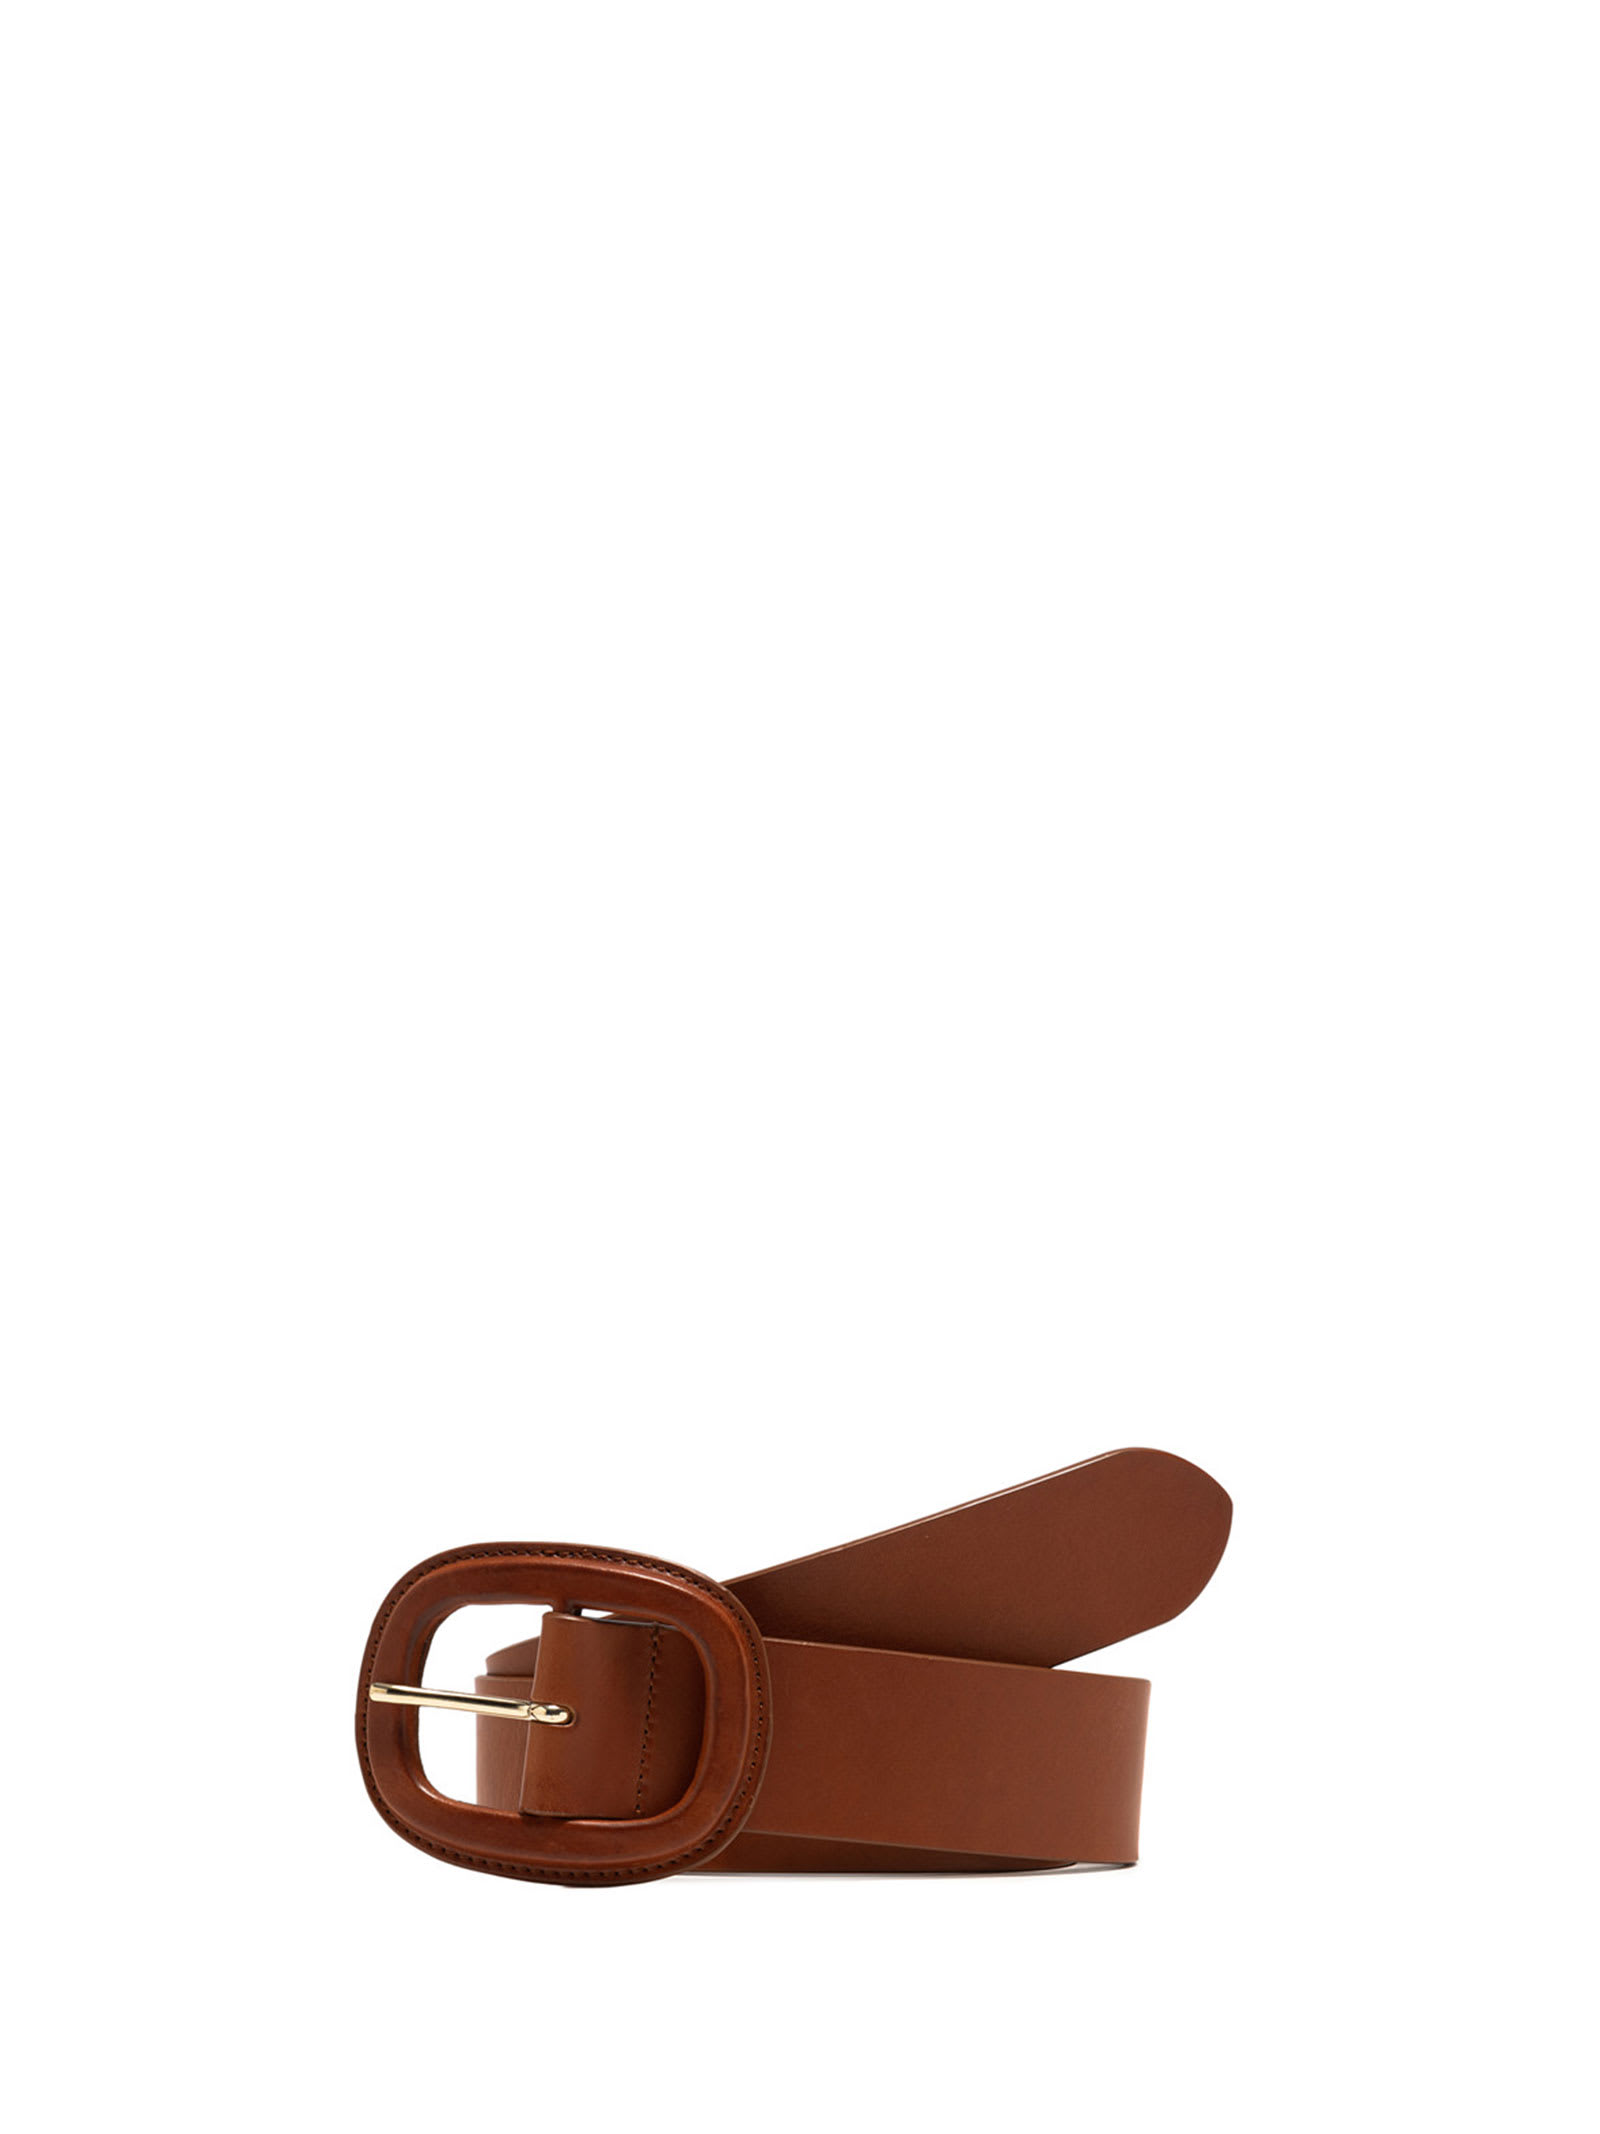 Gianni Chiarini Leather Belt